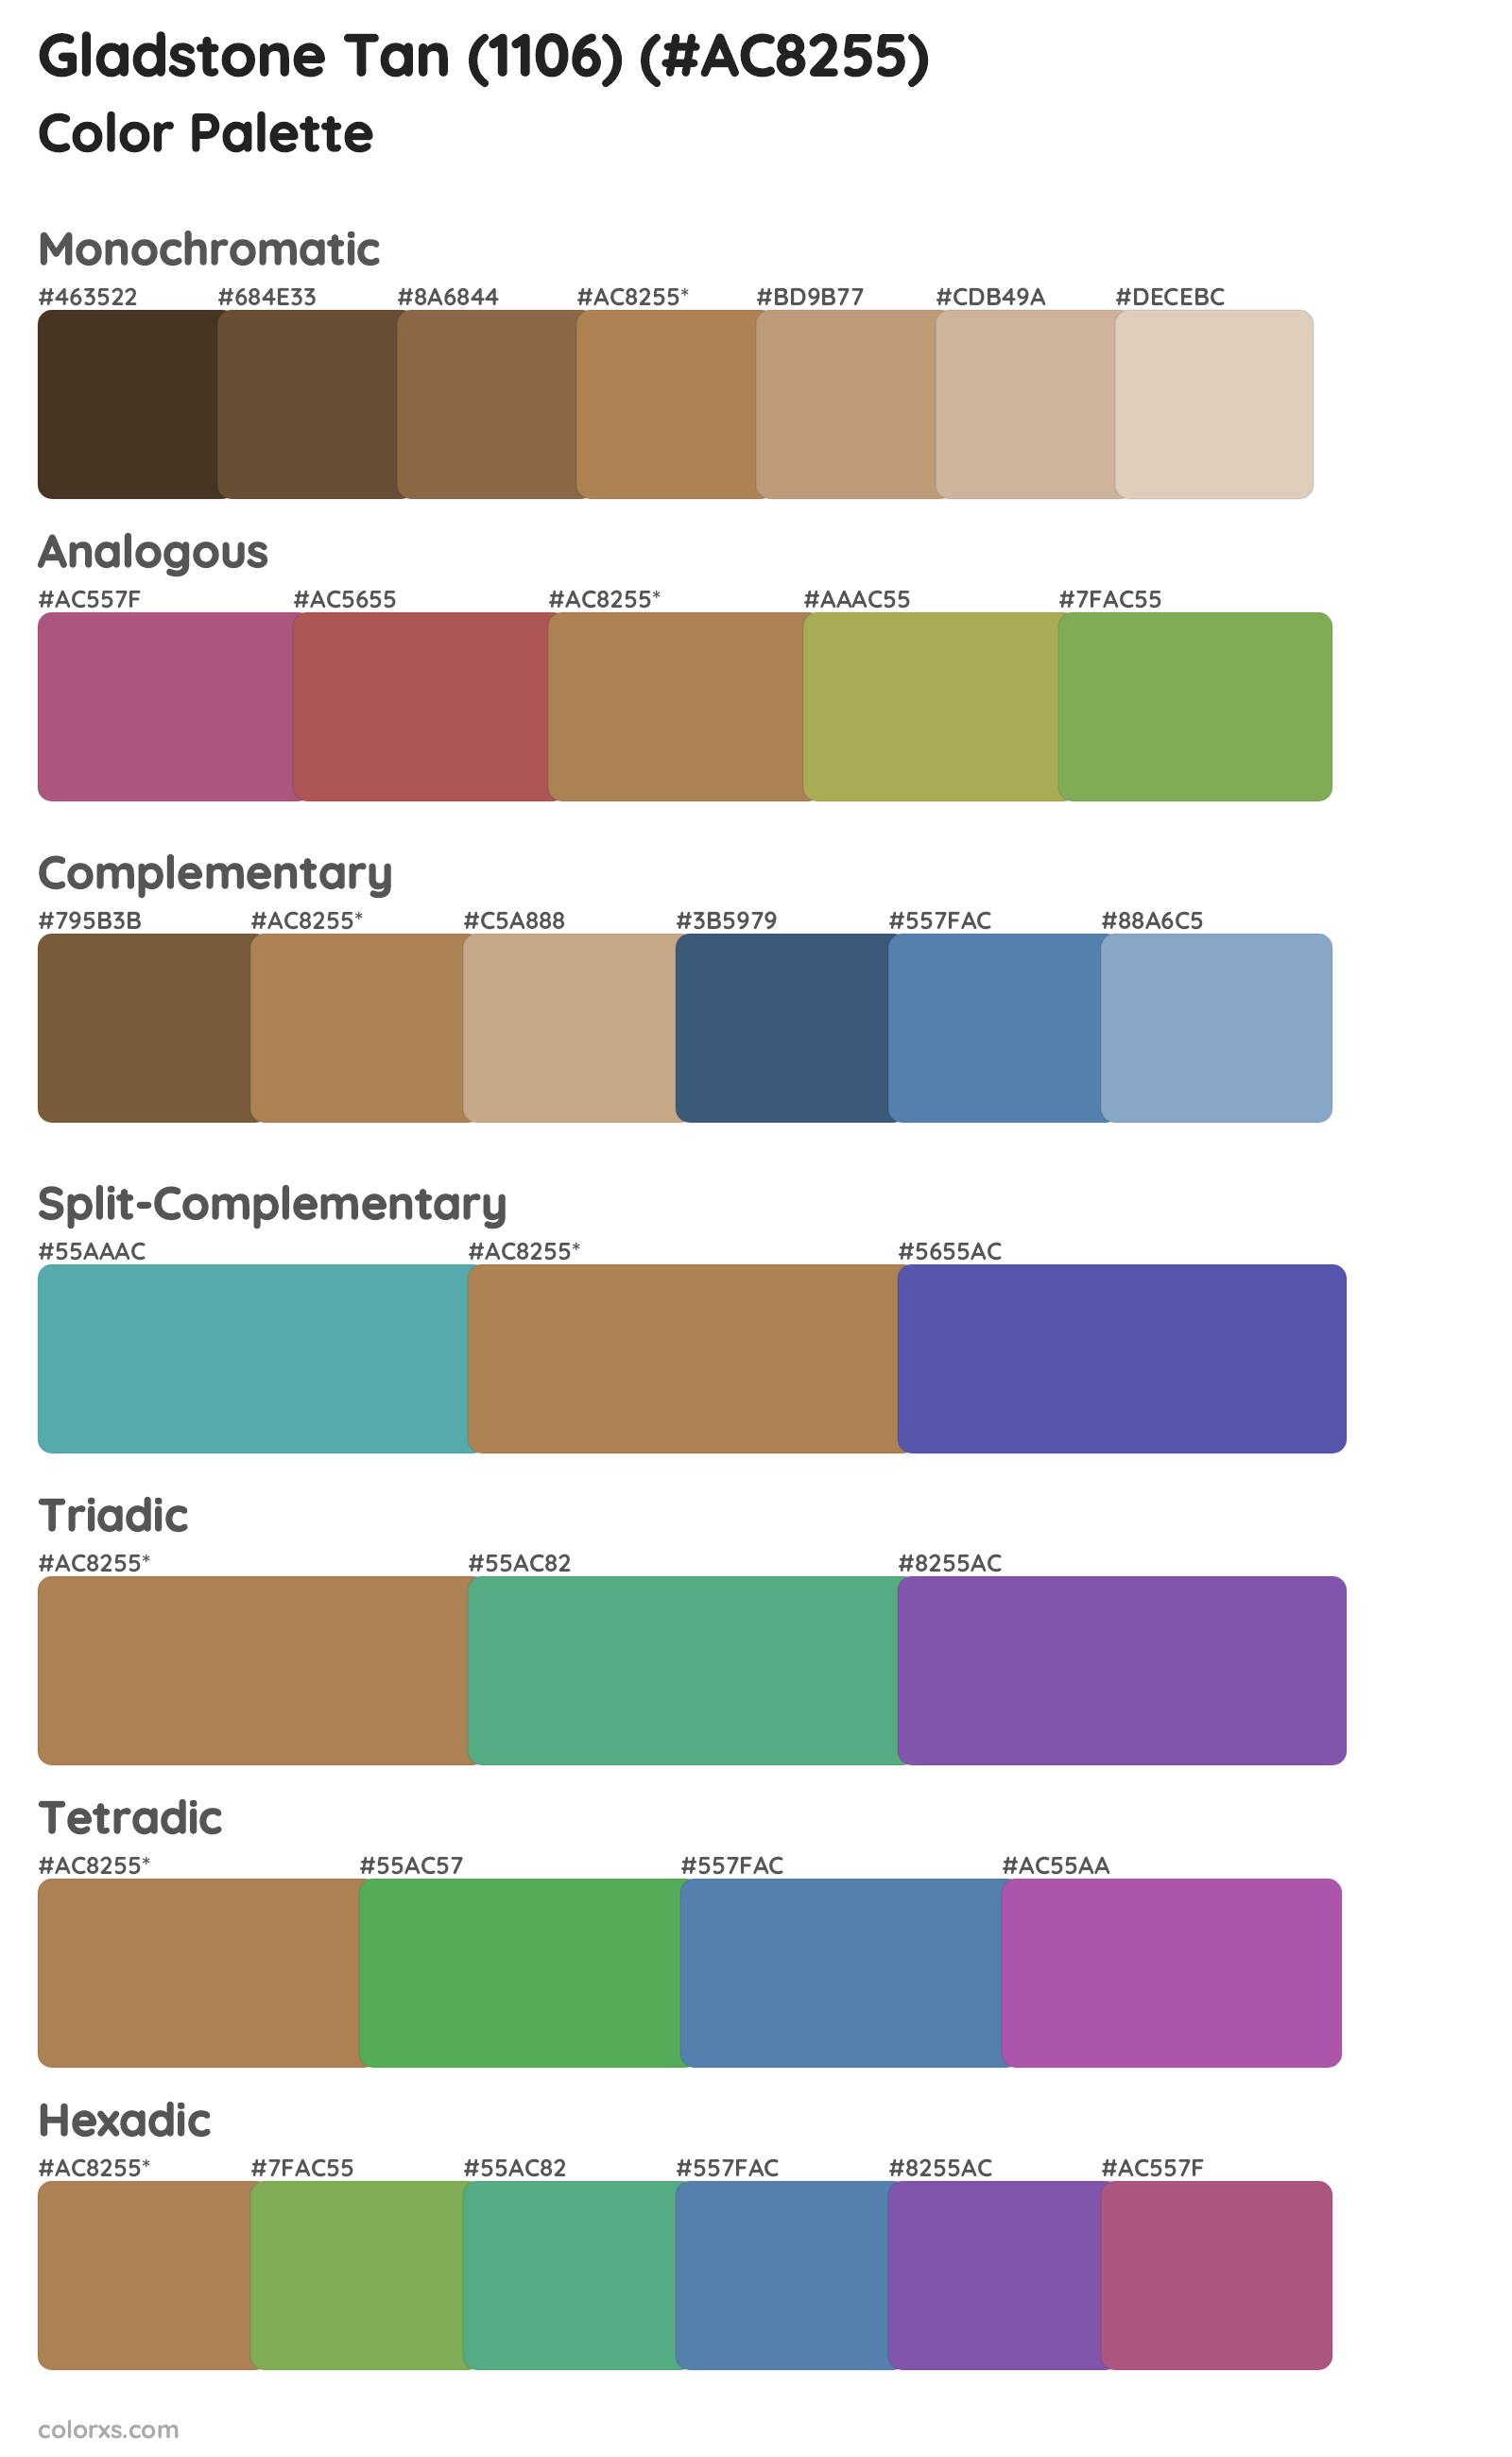 Gladstone Tan (1106) Color Scheme Palettes